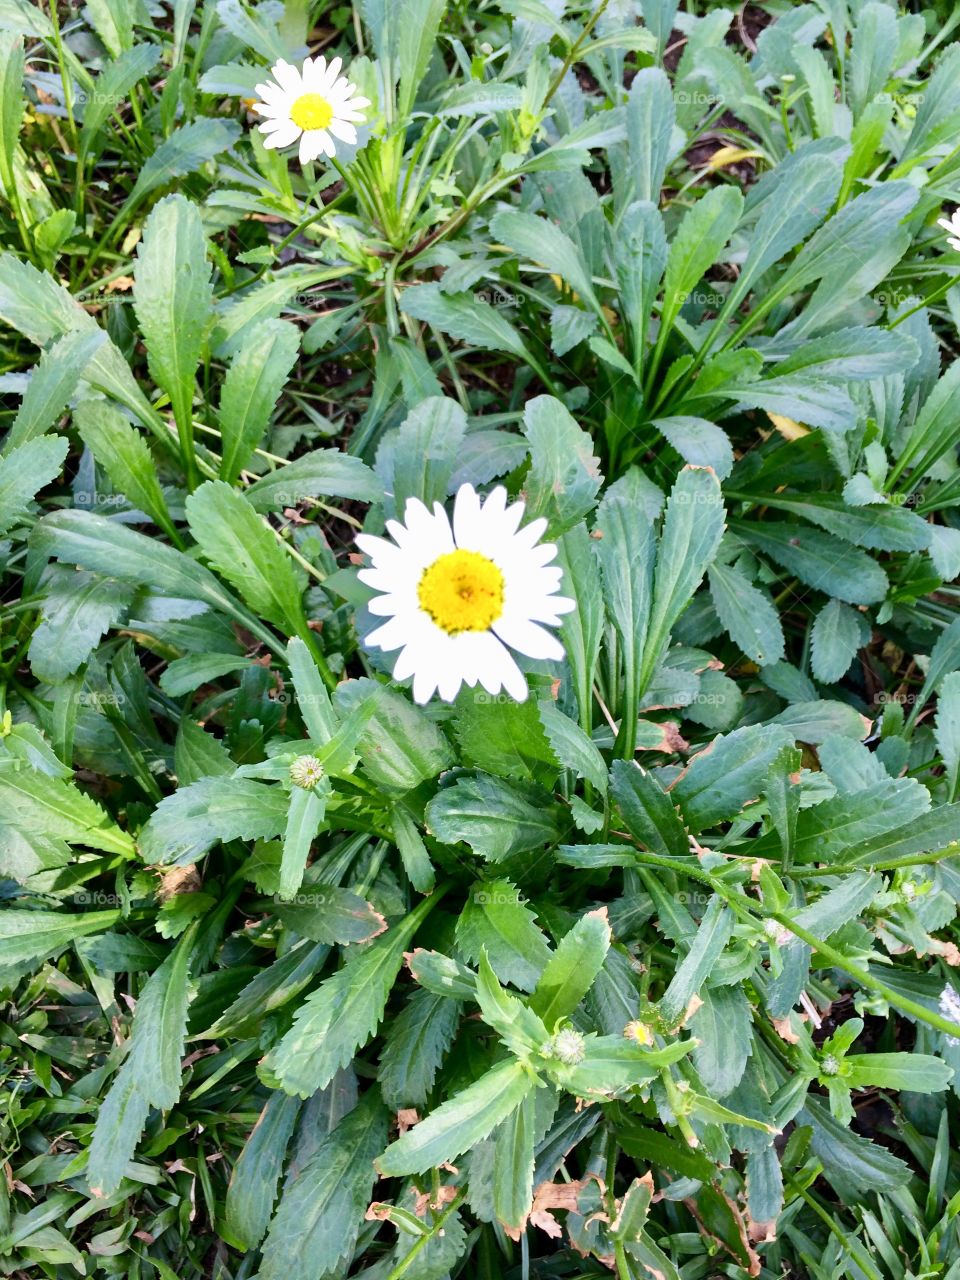 Mini daisies